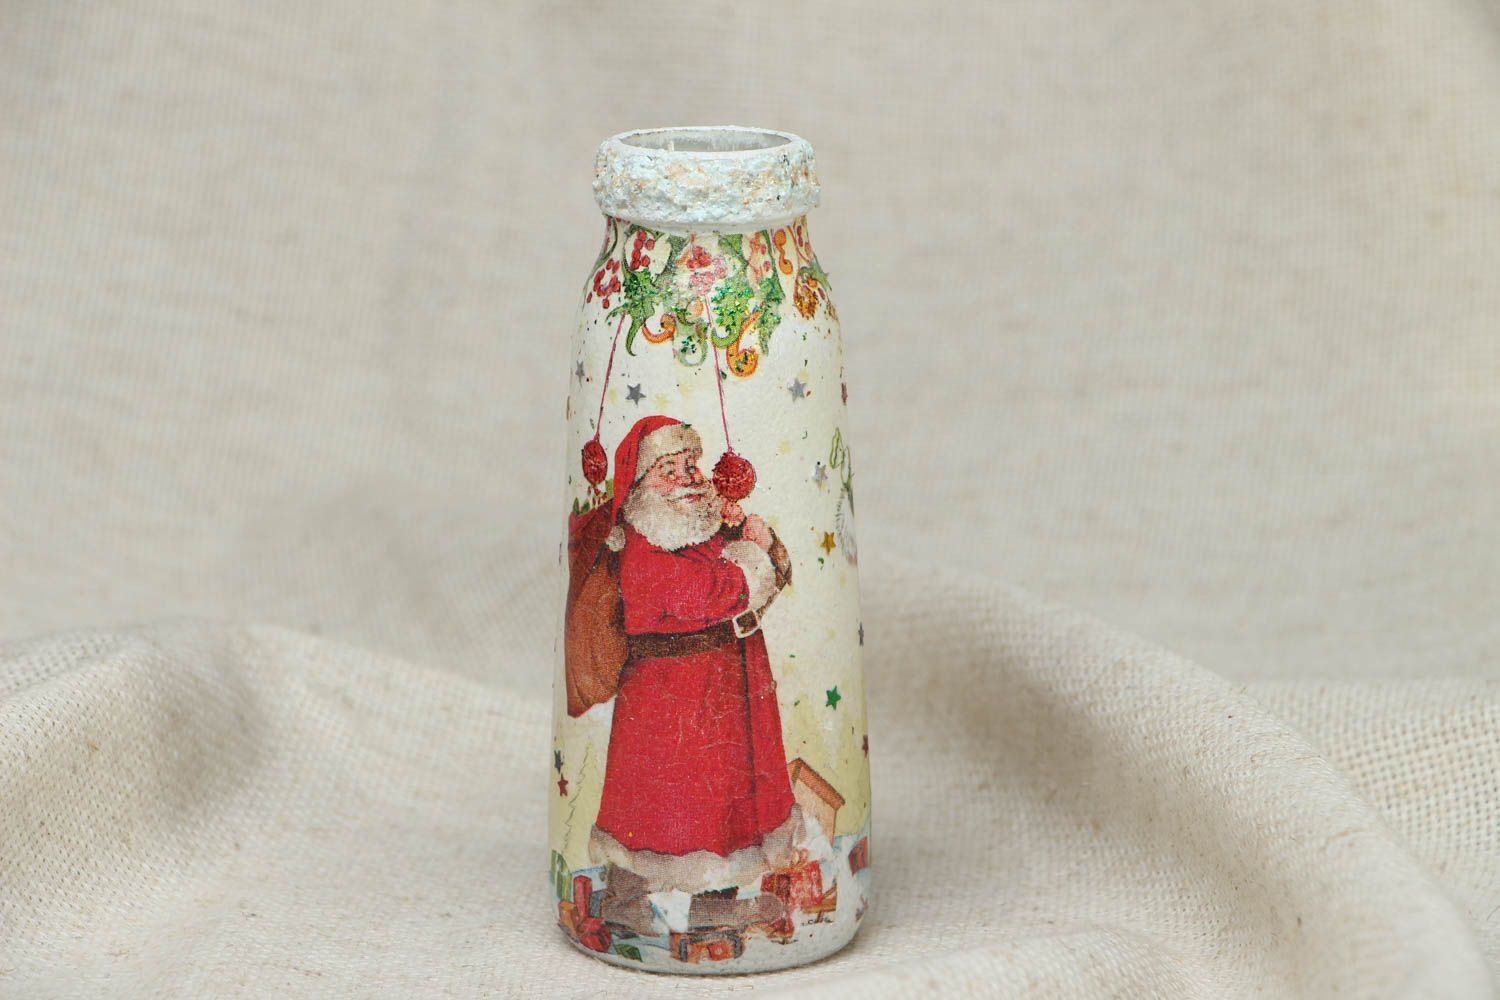 5,5 inches tall glass bottle shape Christmas decorative vase 0,4 lb photo 1